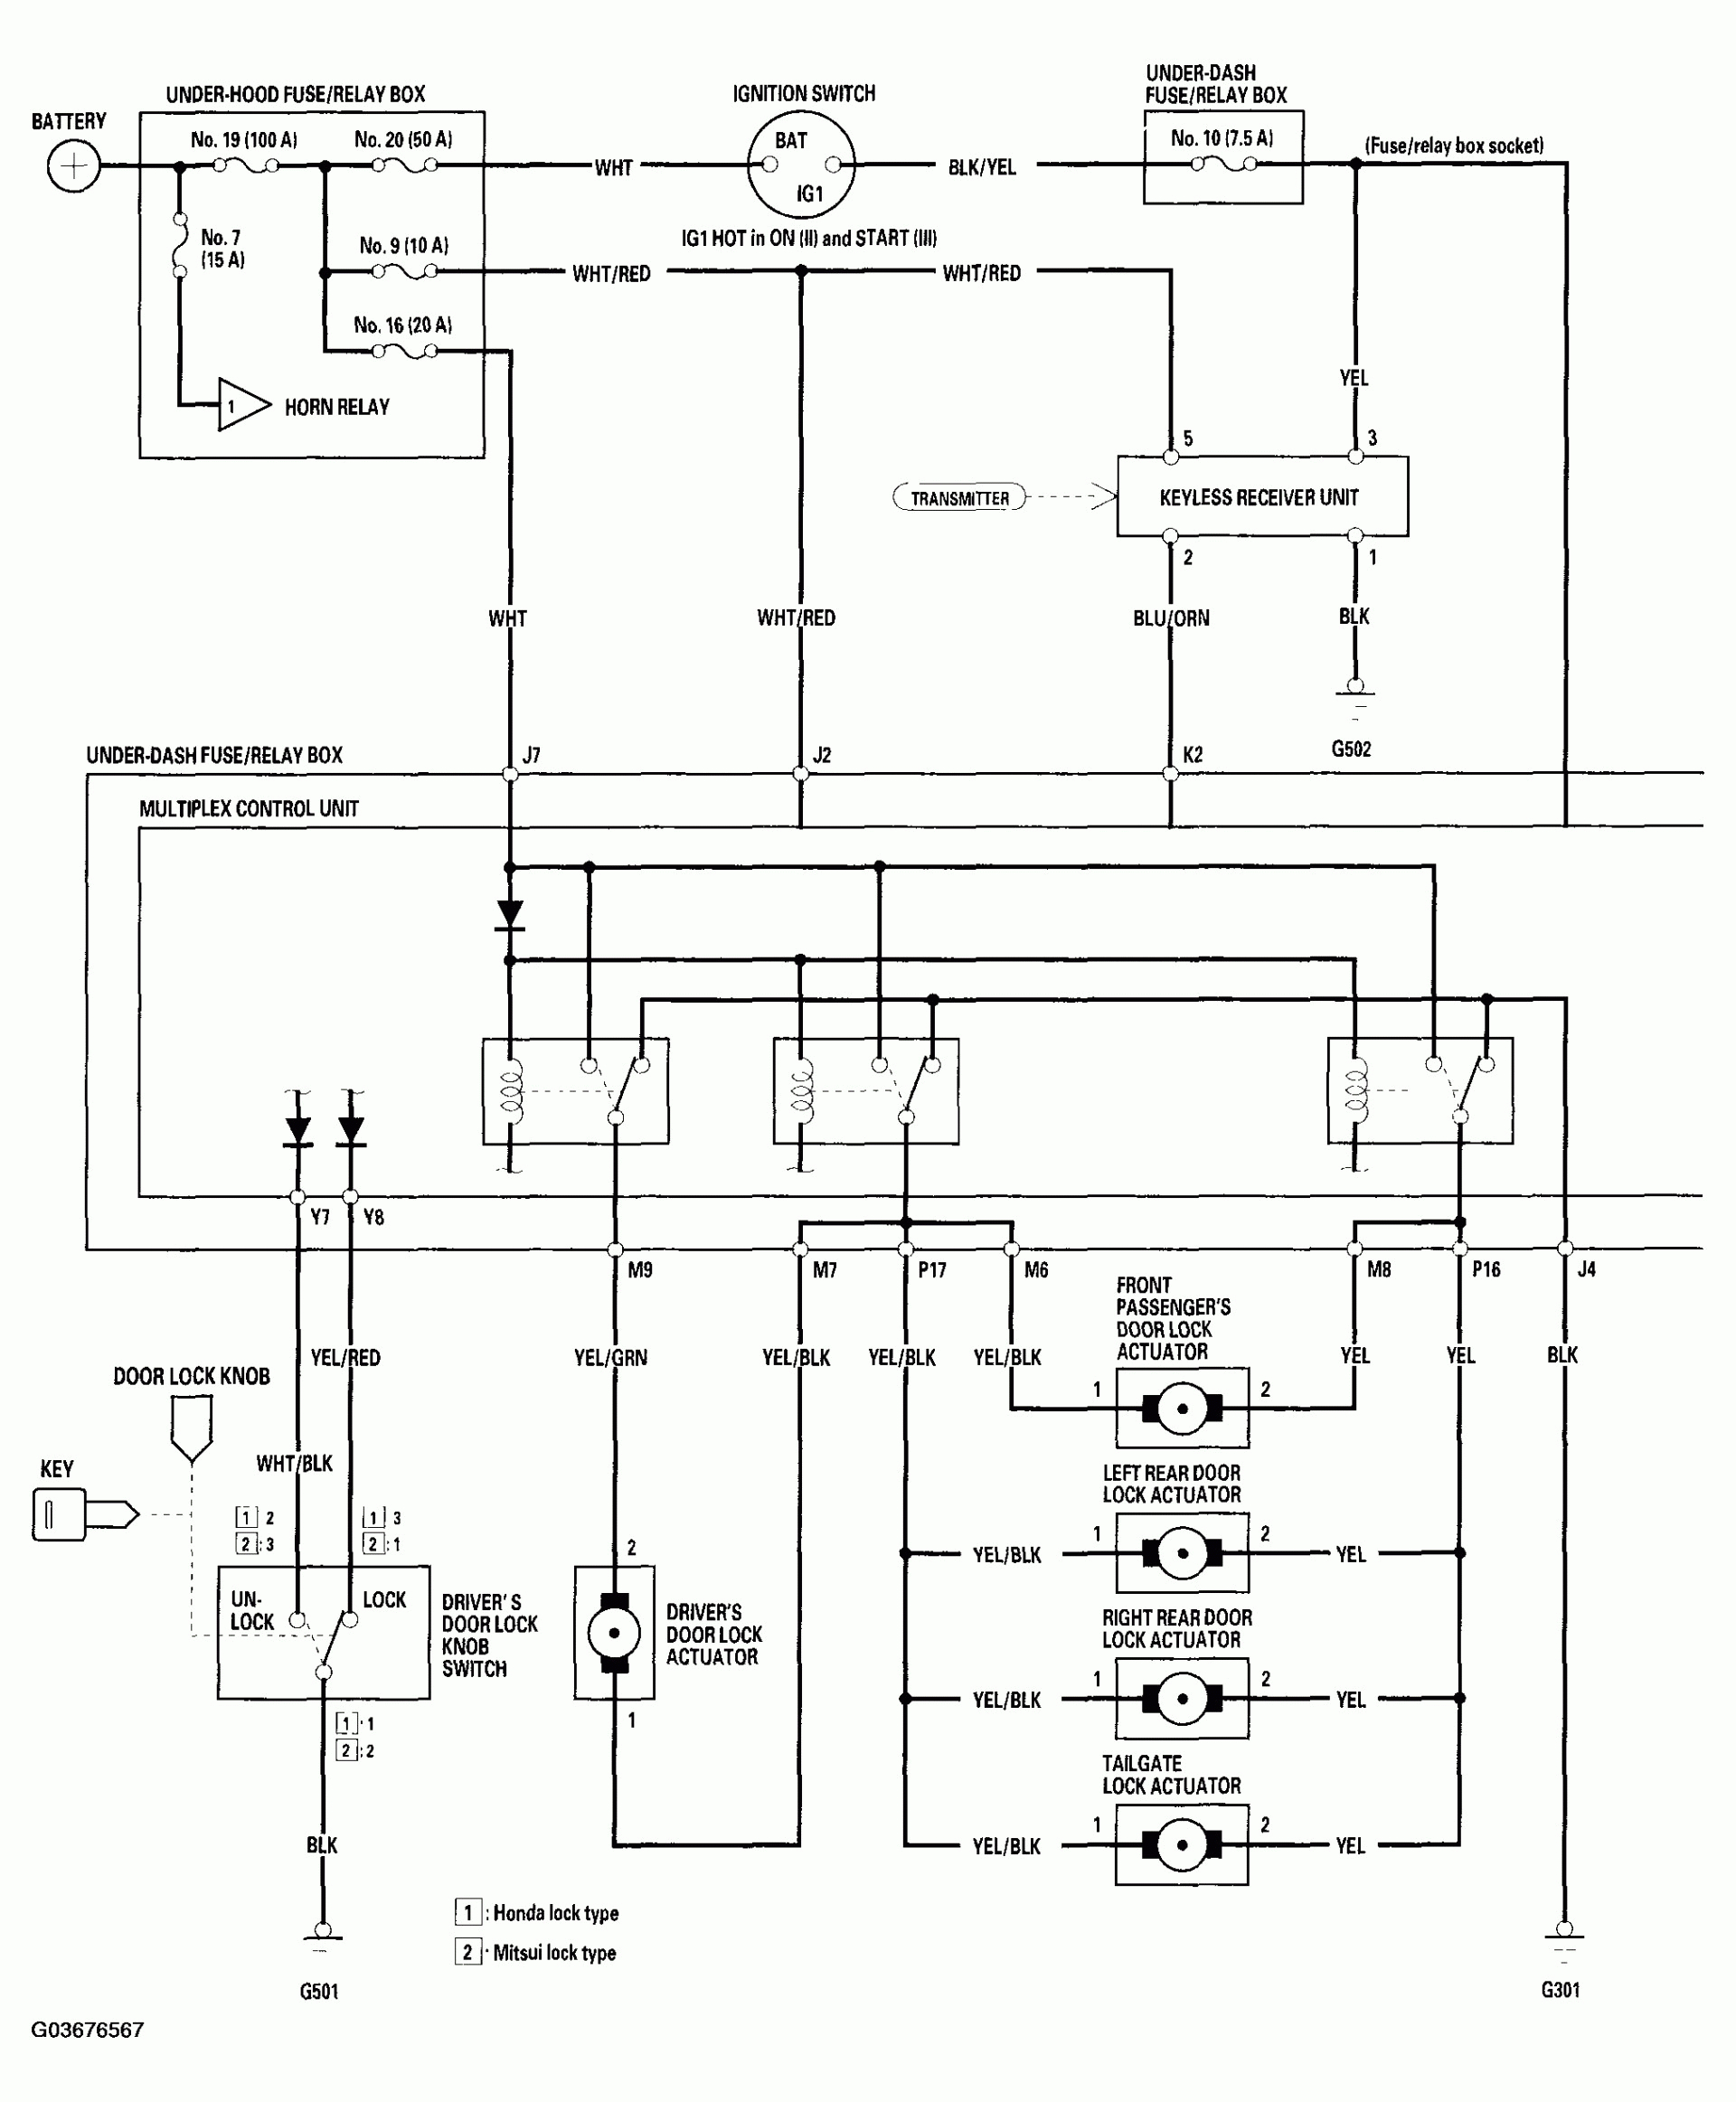 Actuator Wiring | Wiring Diagram - Chevy 4X4 Actuator Wiring Diagram